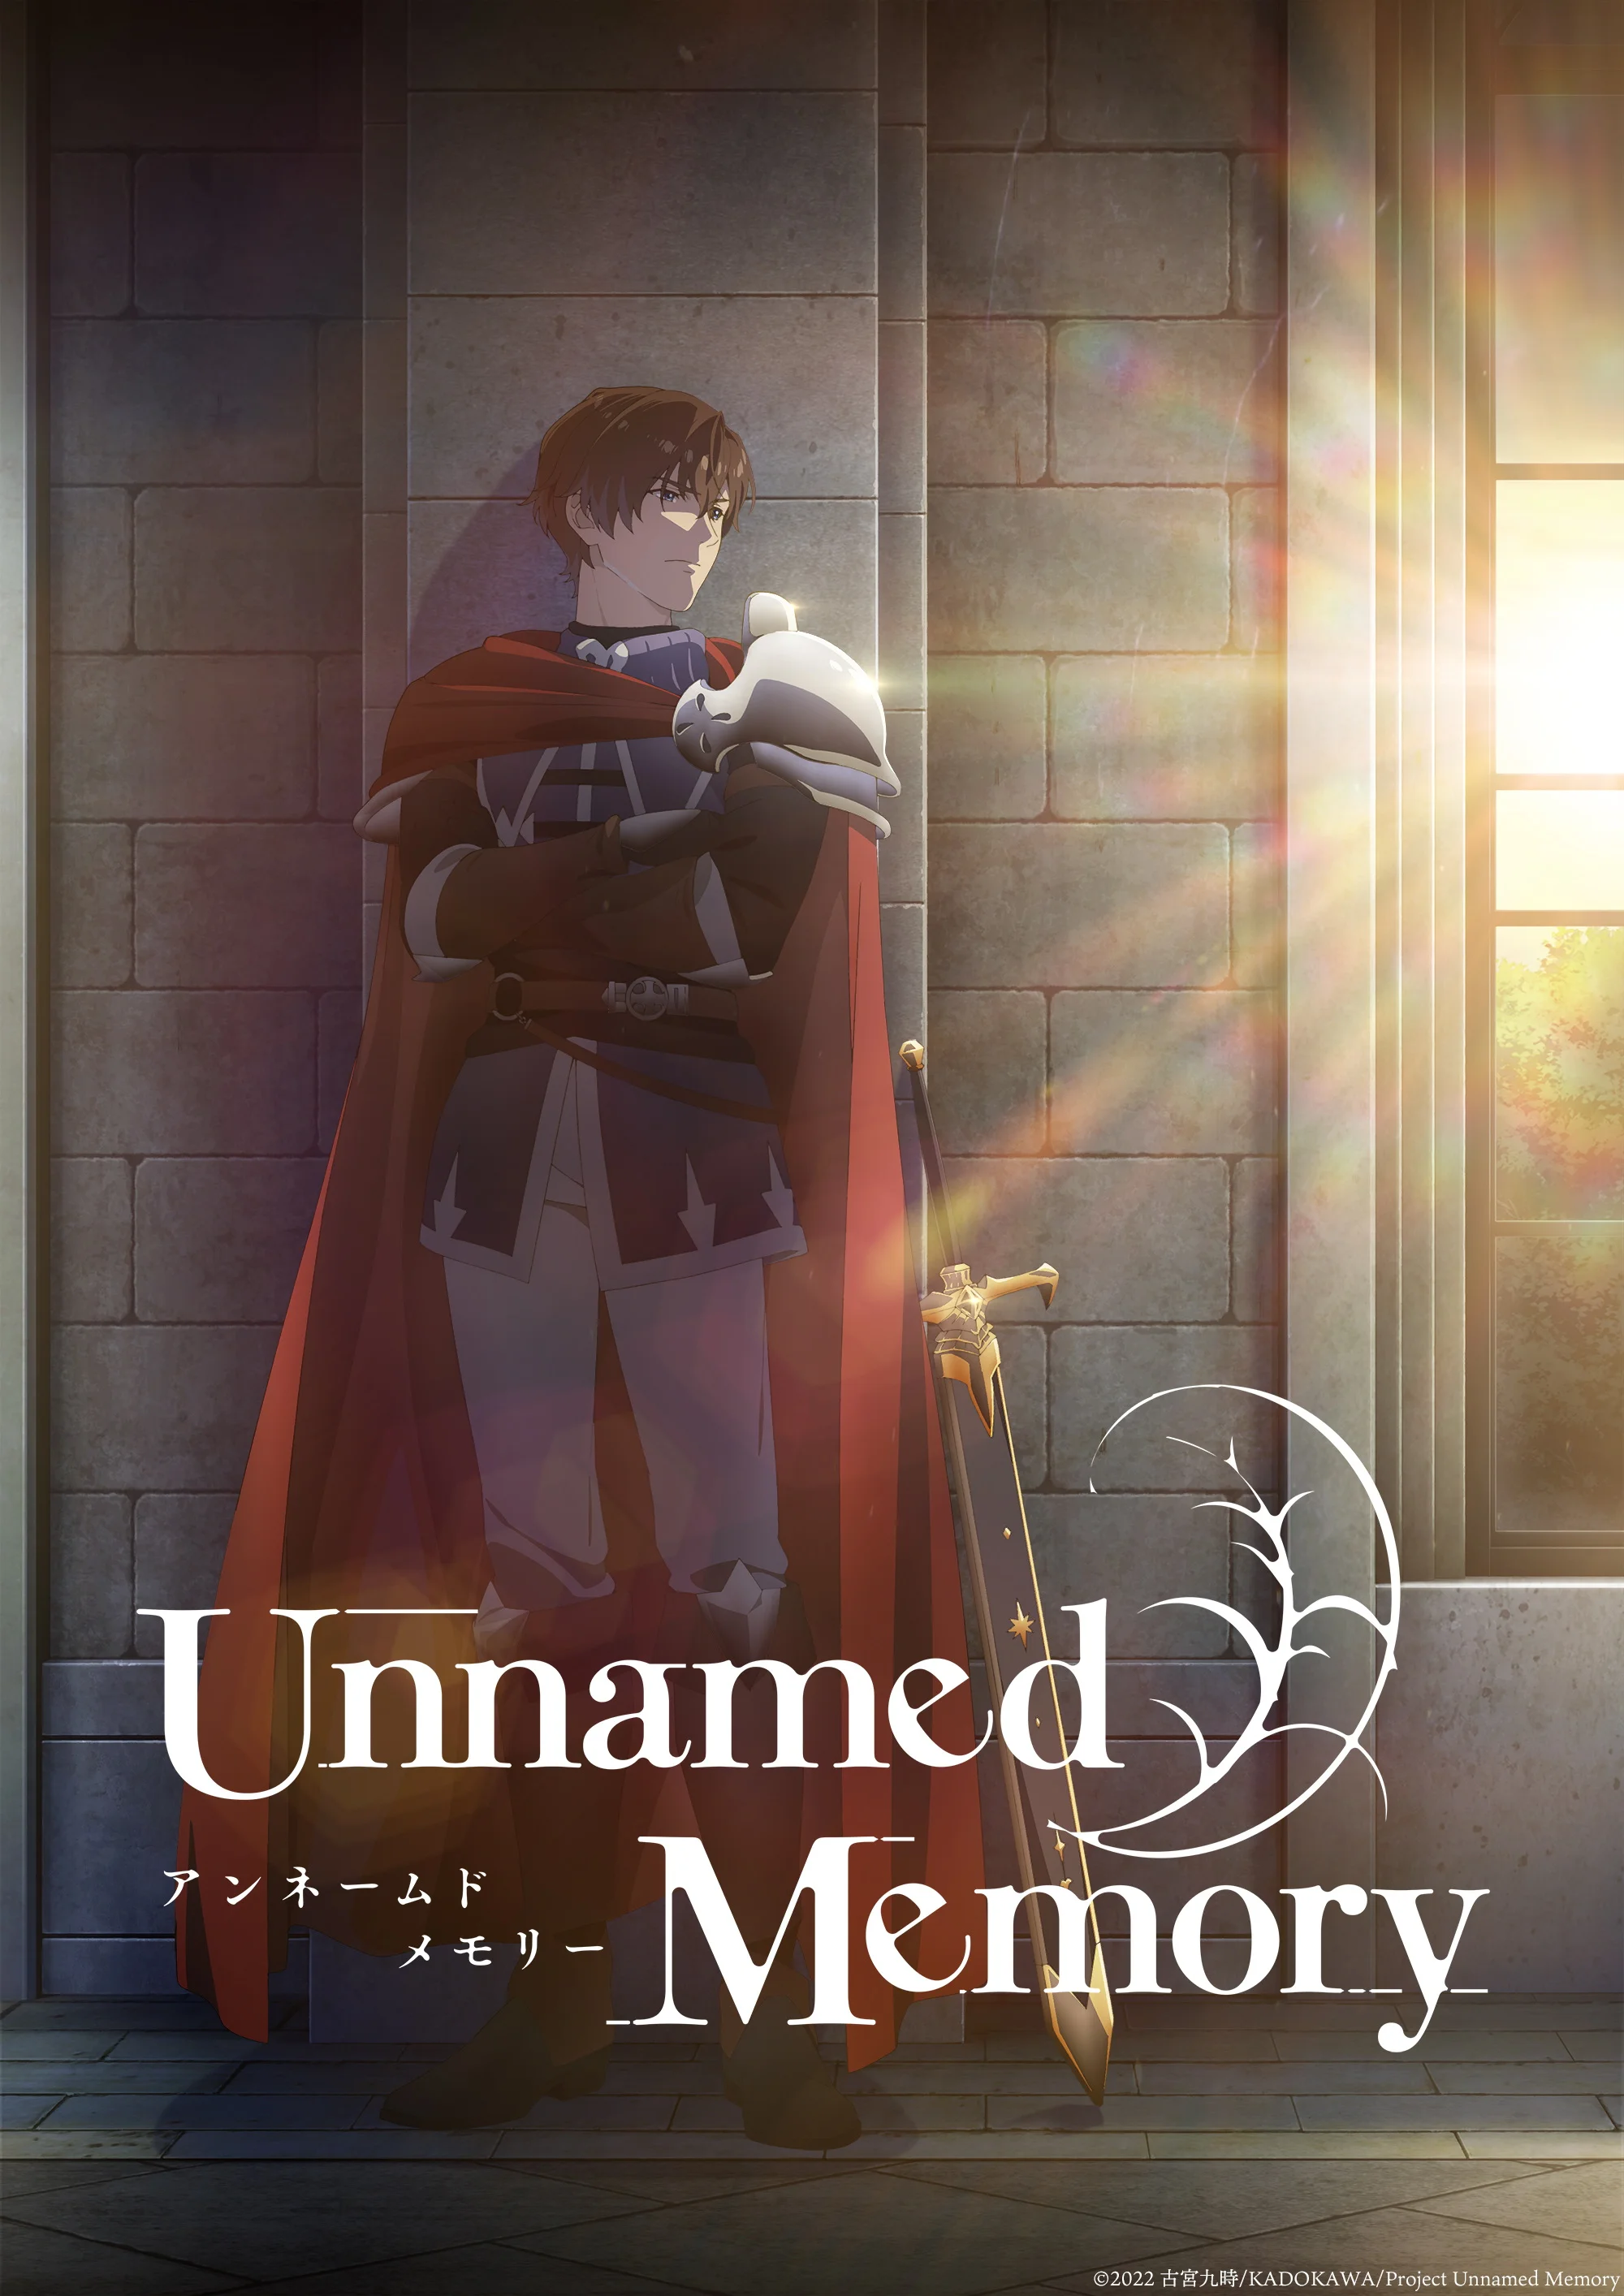 Аниме Unnamed Memory получило тизер и постер - фото 1